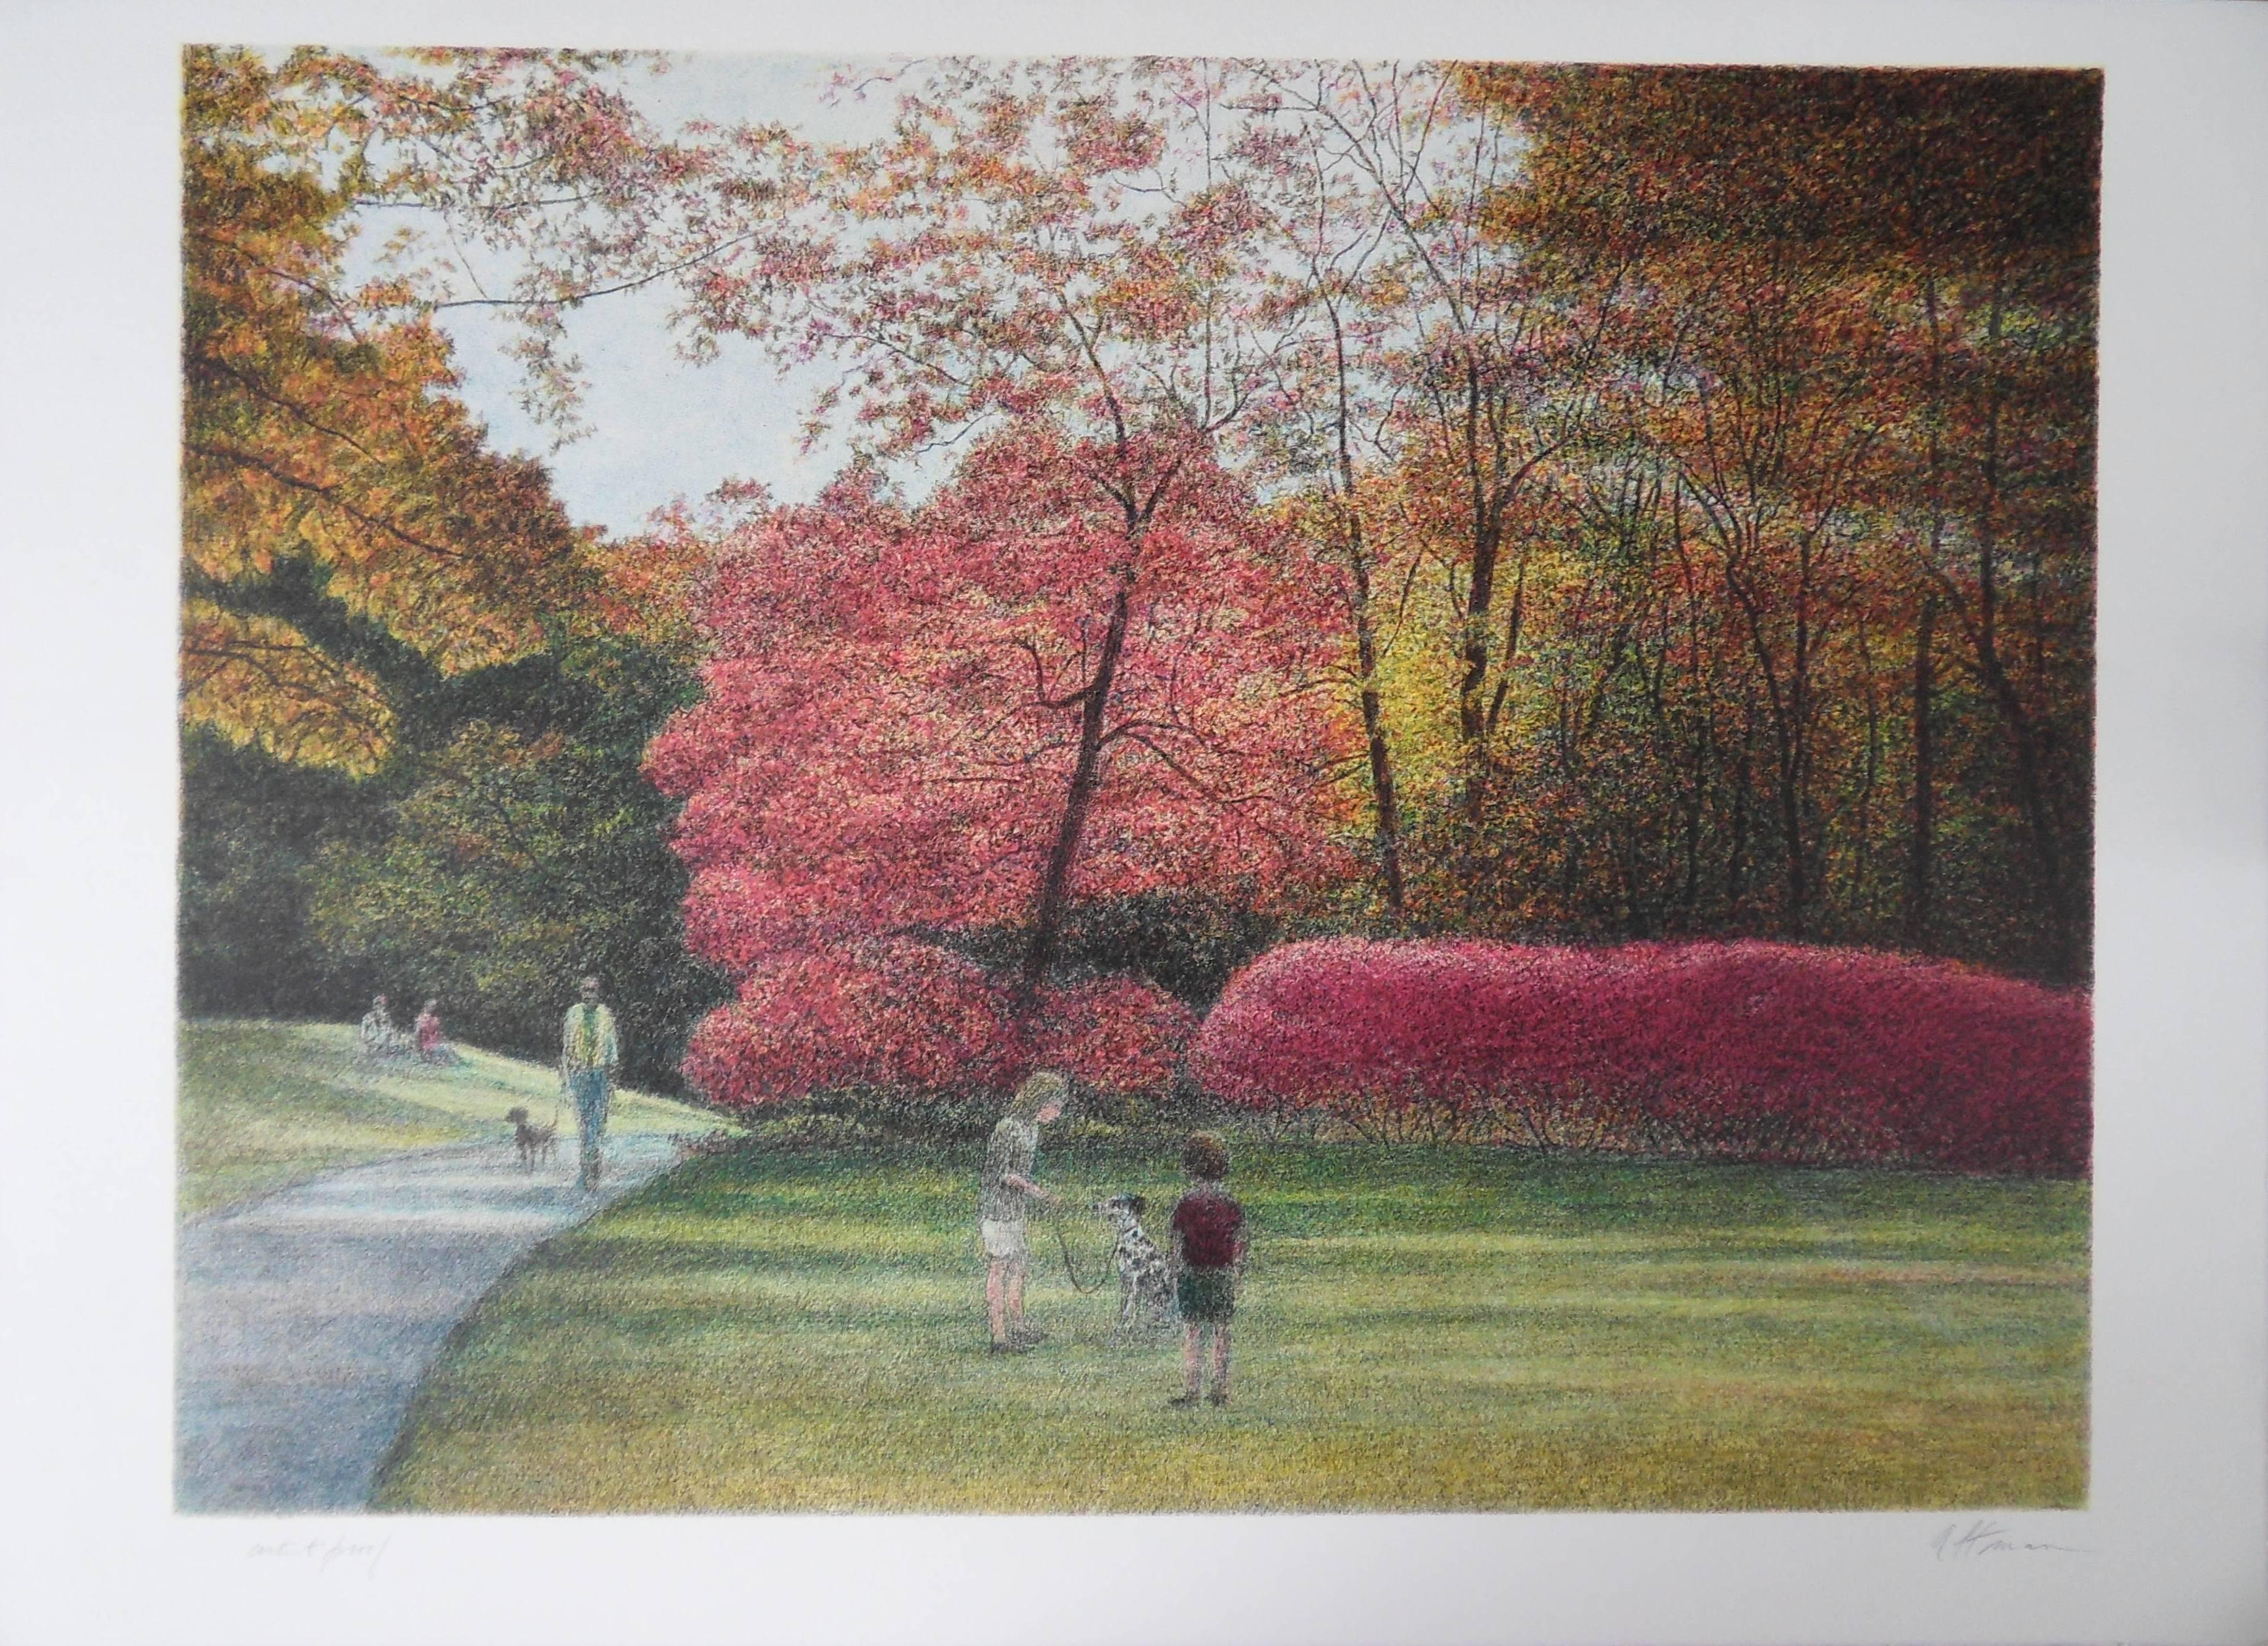 Harold Altman Landscape Print - New York : Fall, Indian Summer in Central Park - Original handsigned lithograph